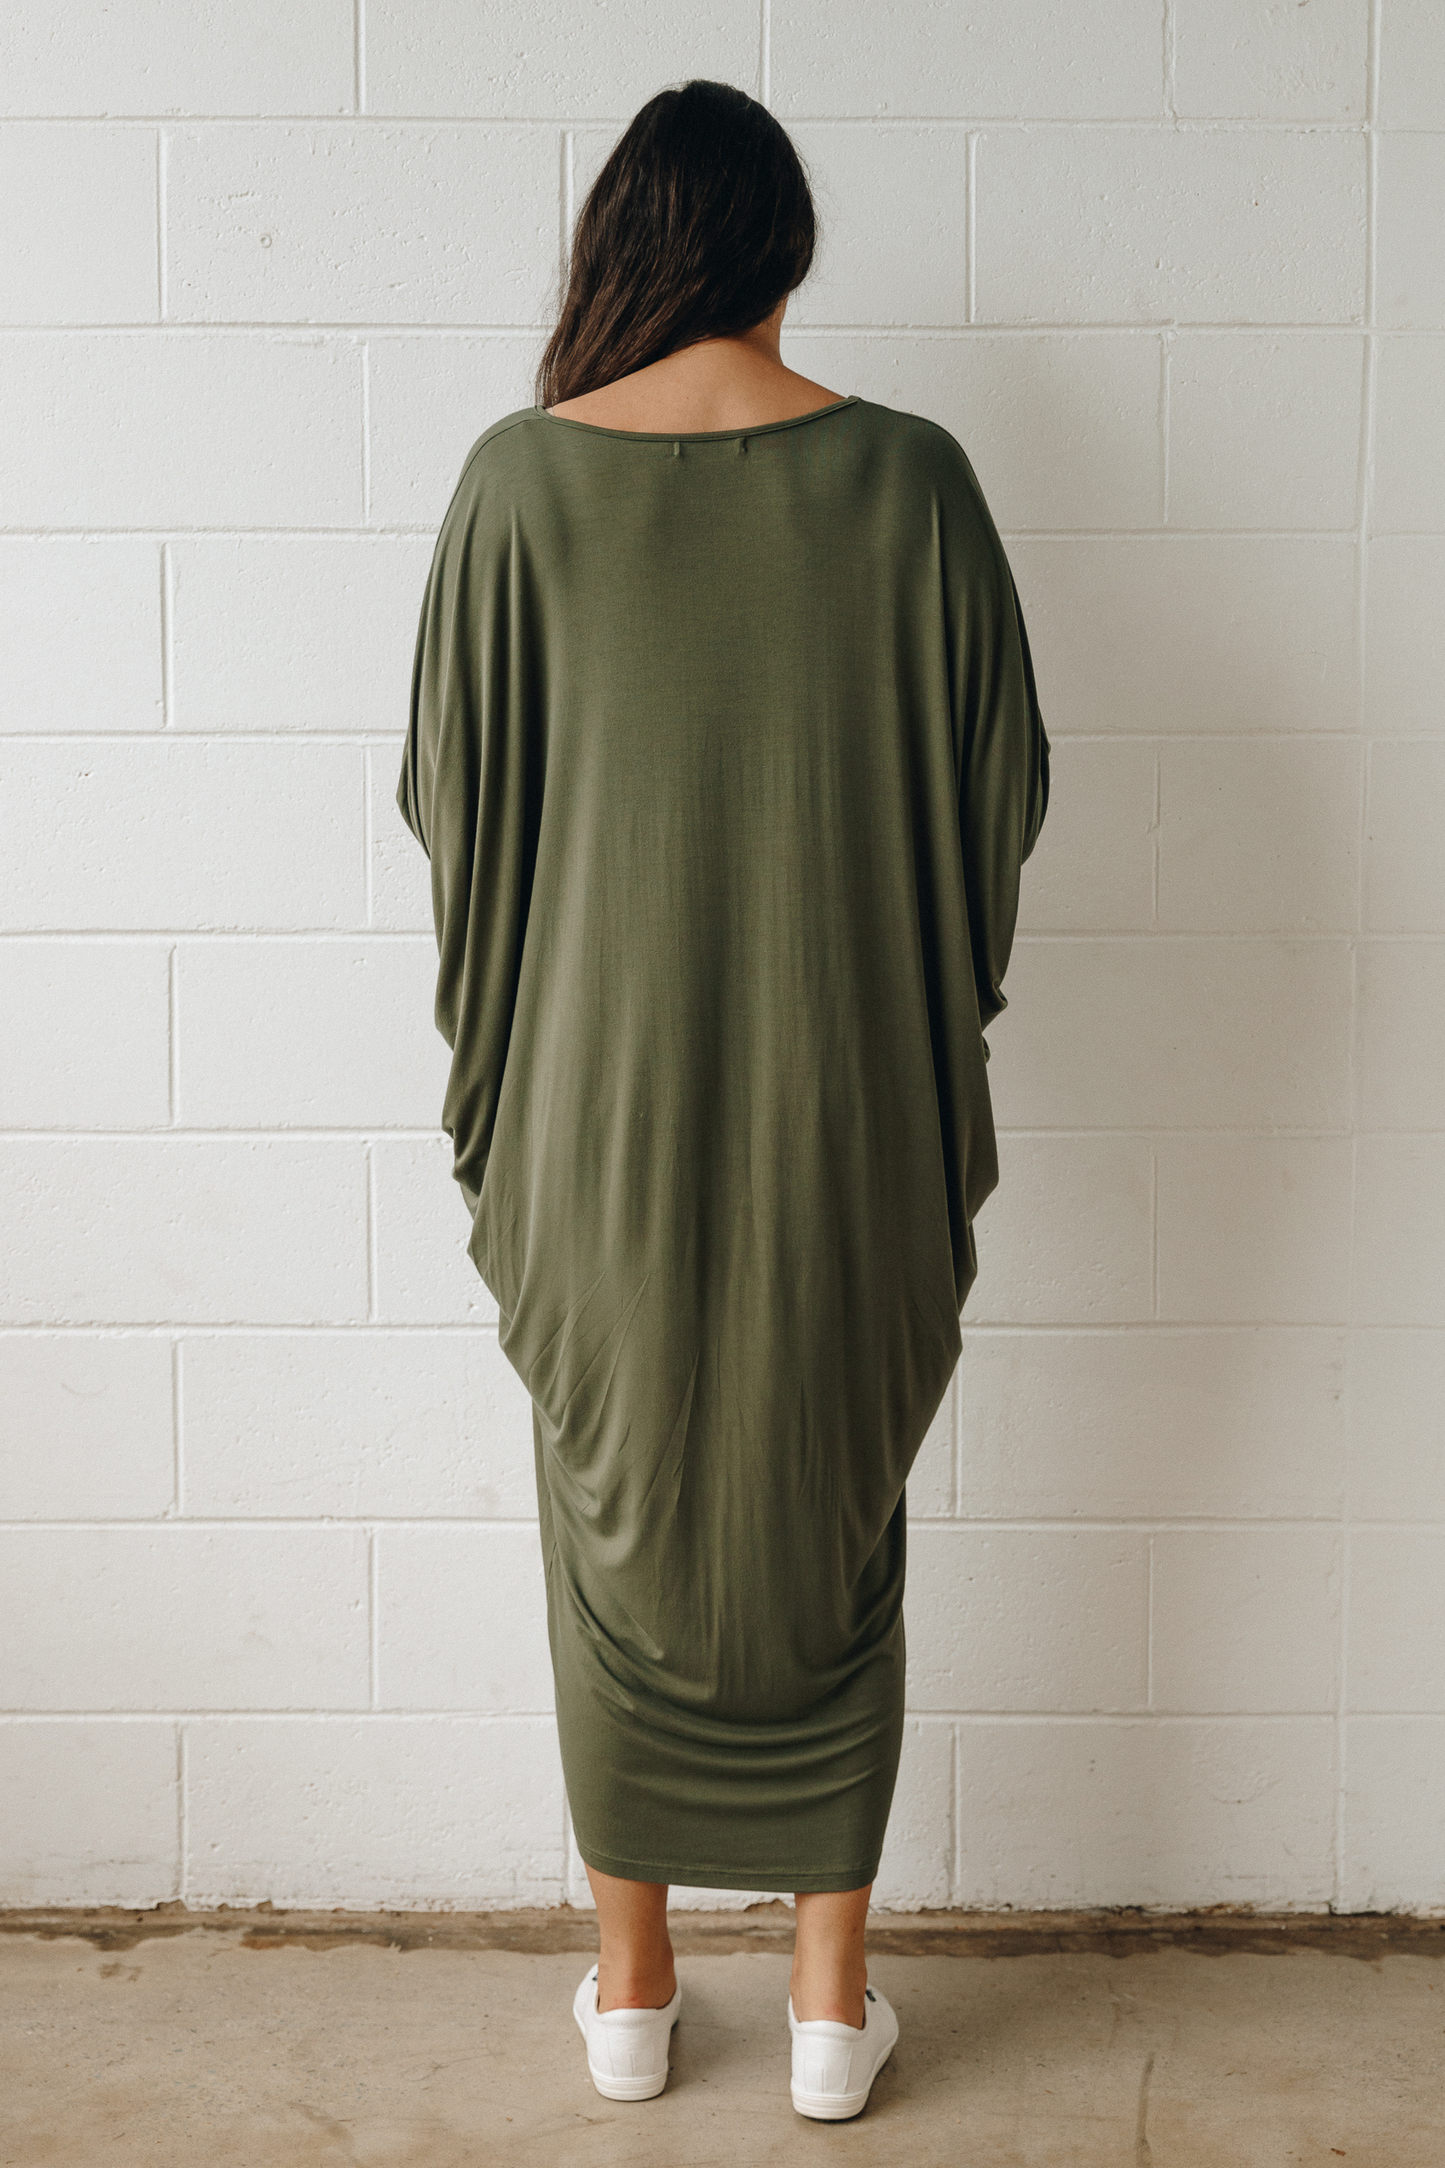 Long Sleeve Maxi Miracle Dress in Khaki